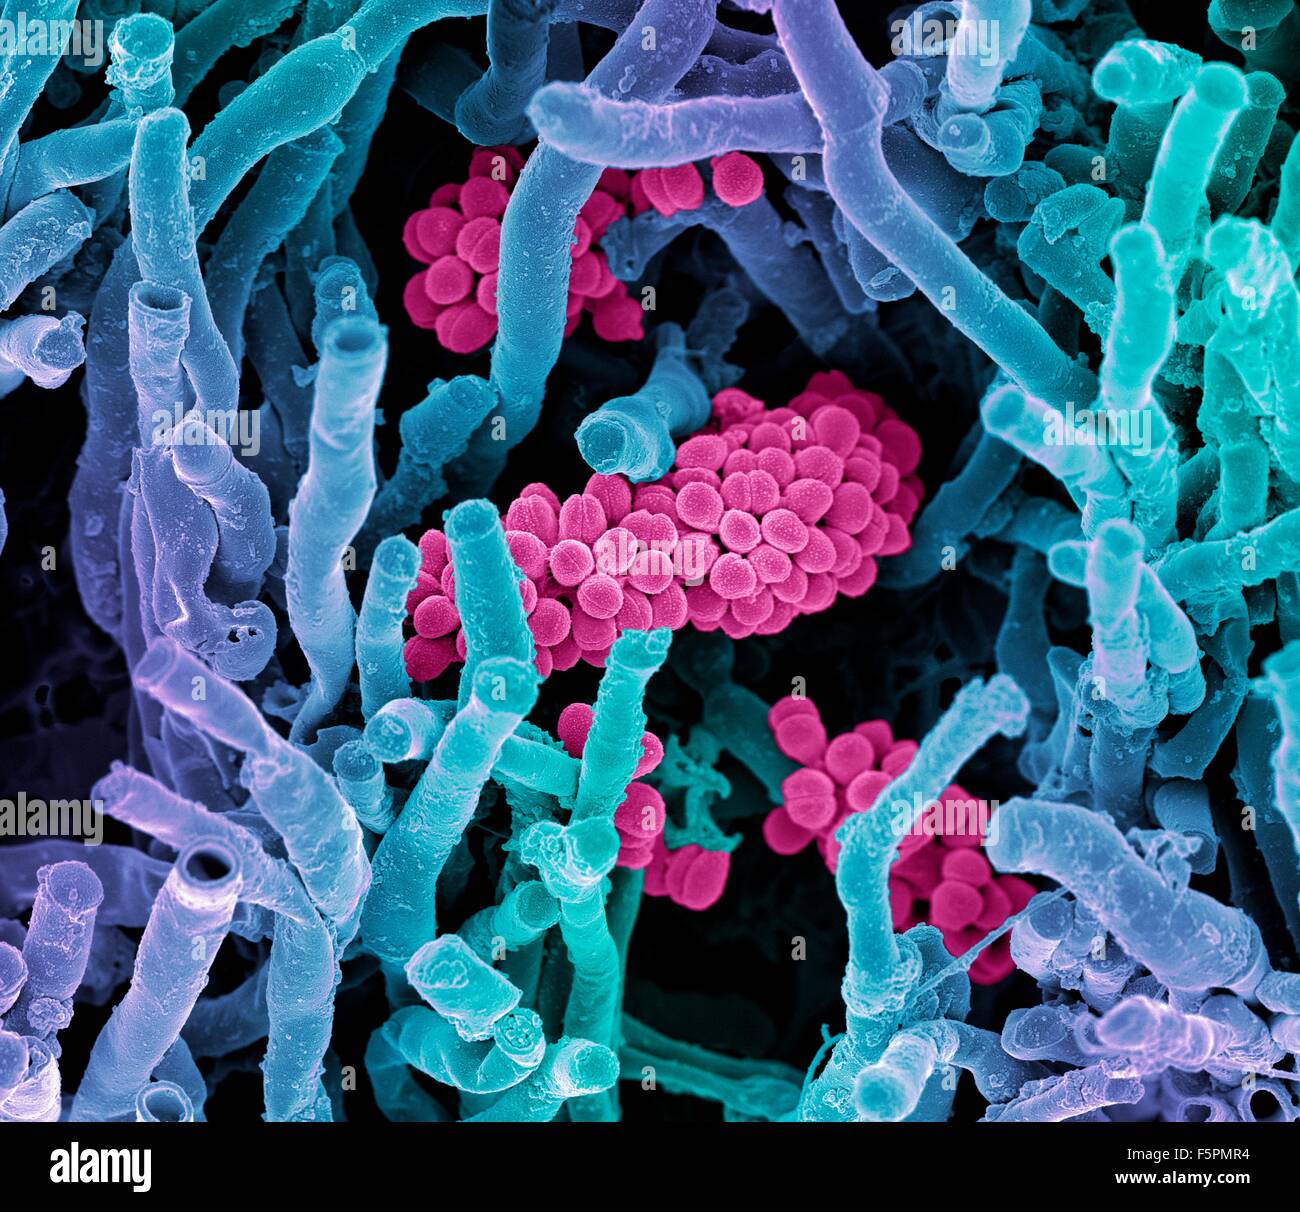 Streptomyces coelicoflavus bacteria. Coloured scanning electron micrograph (SEM) of Streptomyces coelicoflavus bacteria Stock Photo